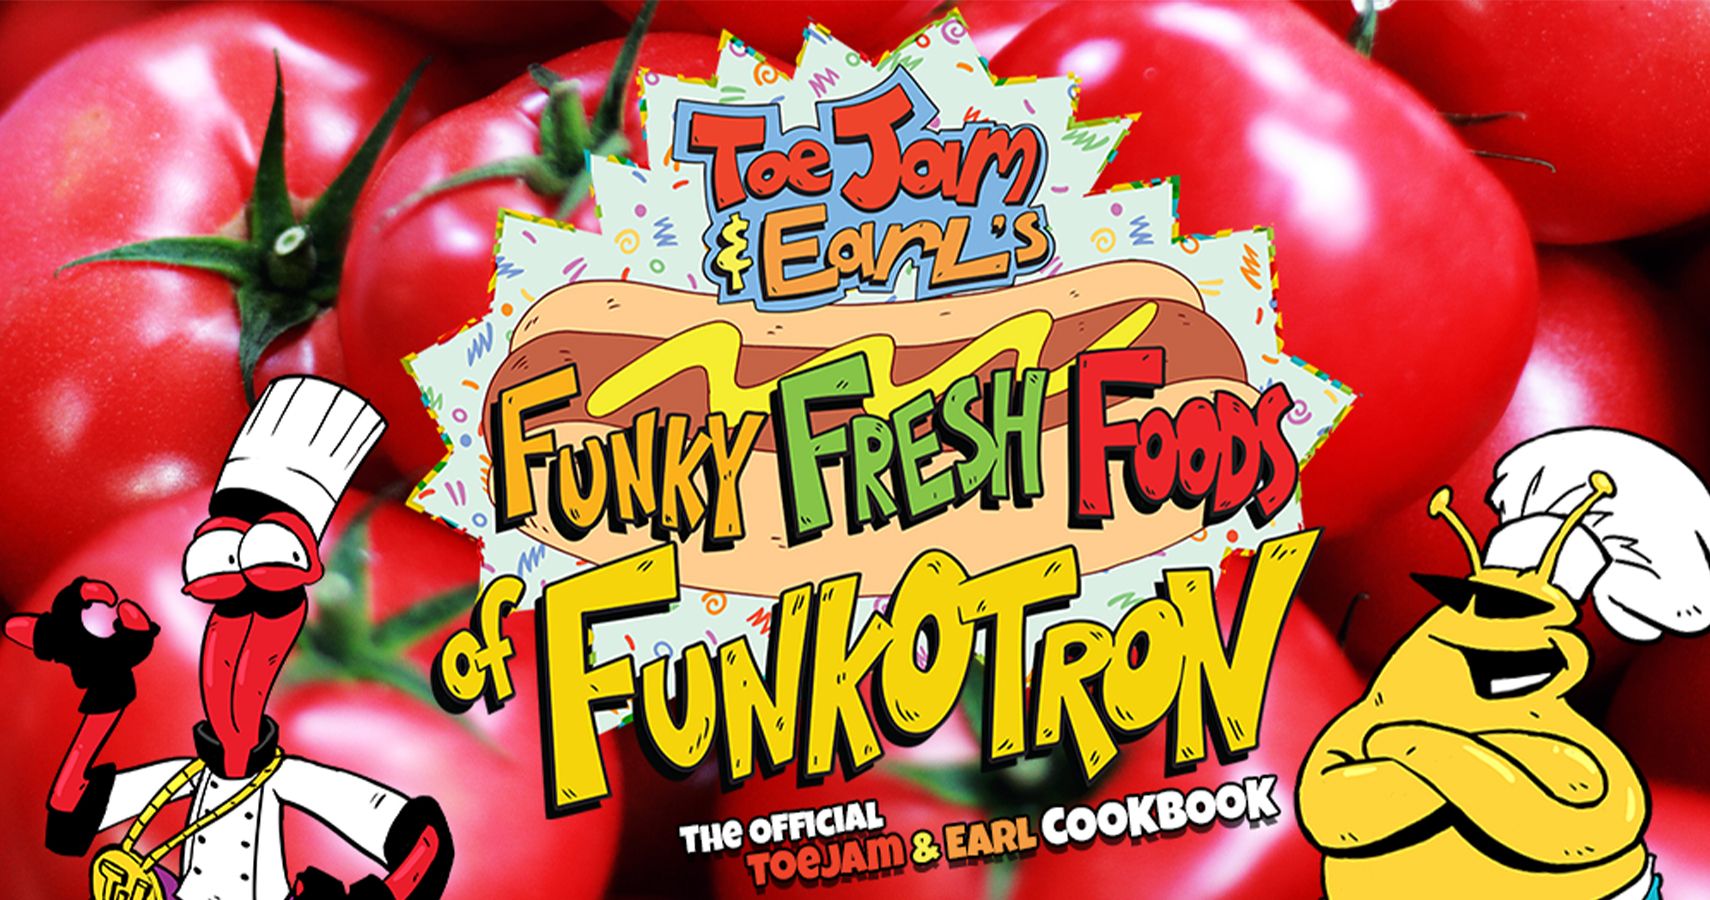 The ToeJam & Earl Funky Fresh Foods of Funkotron digital banner.